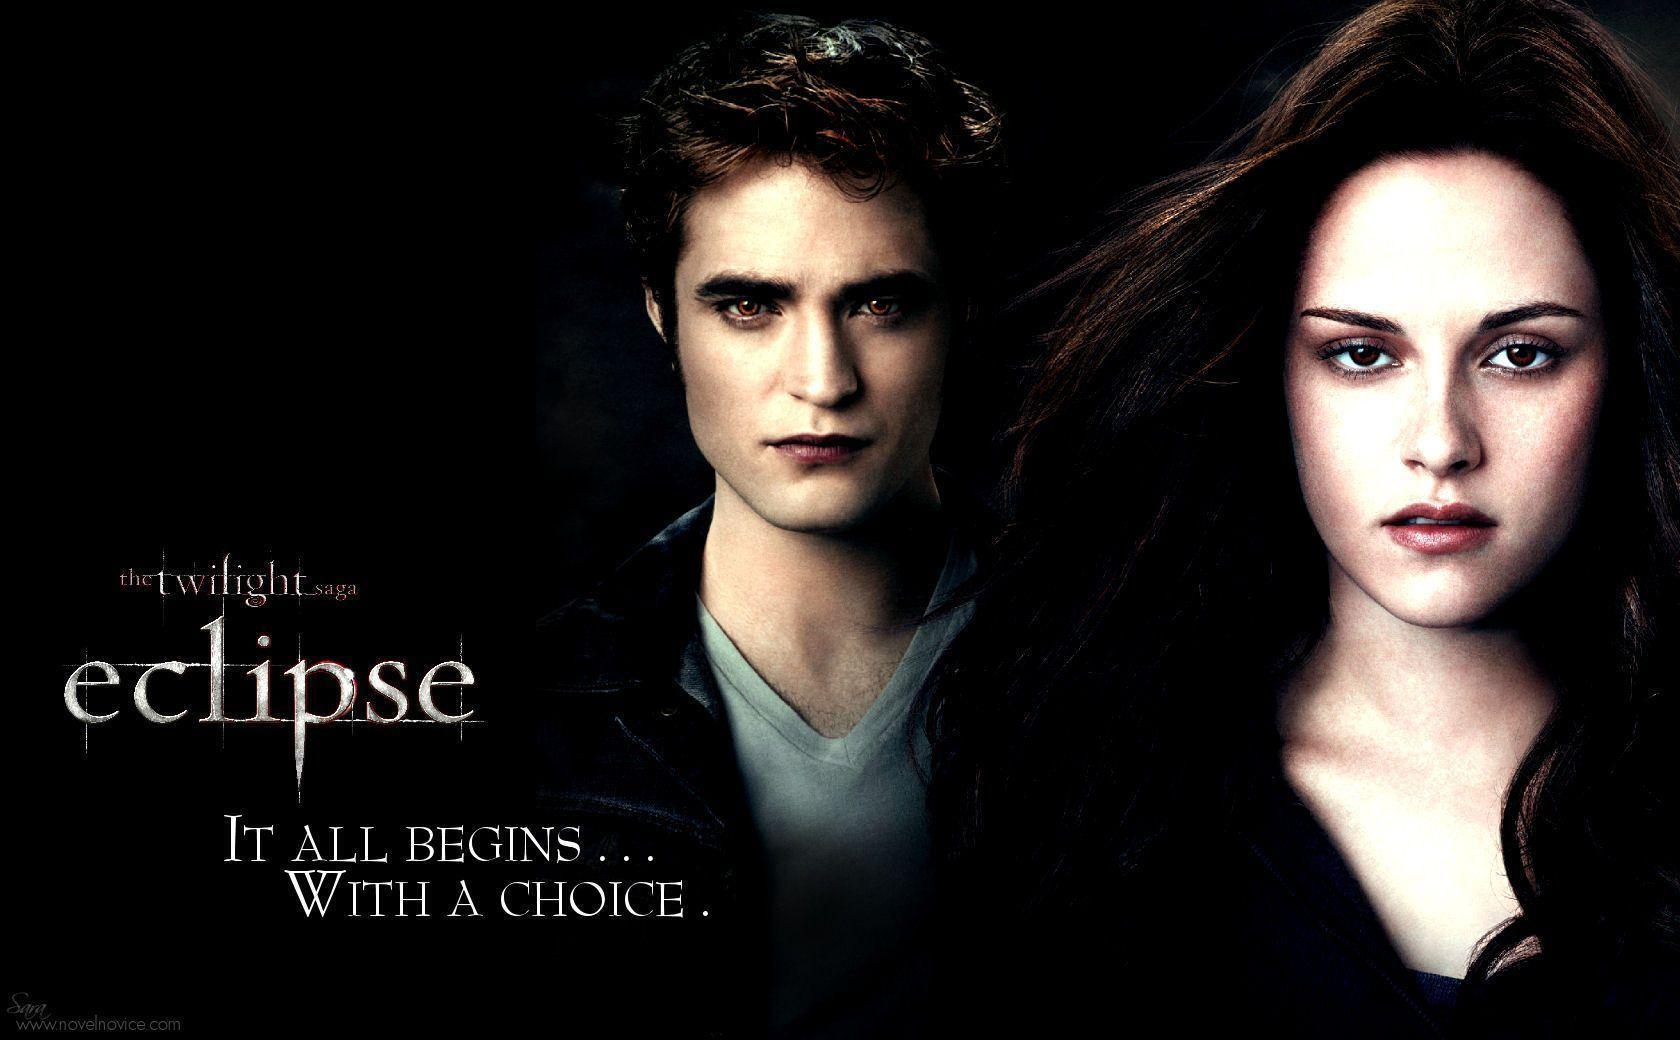 Desktop Wallpaper for The Twilight Saga Eclipse Series